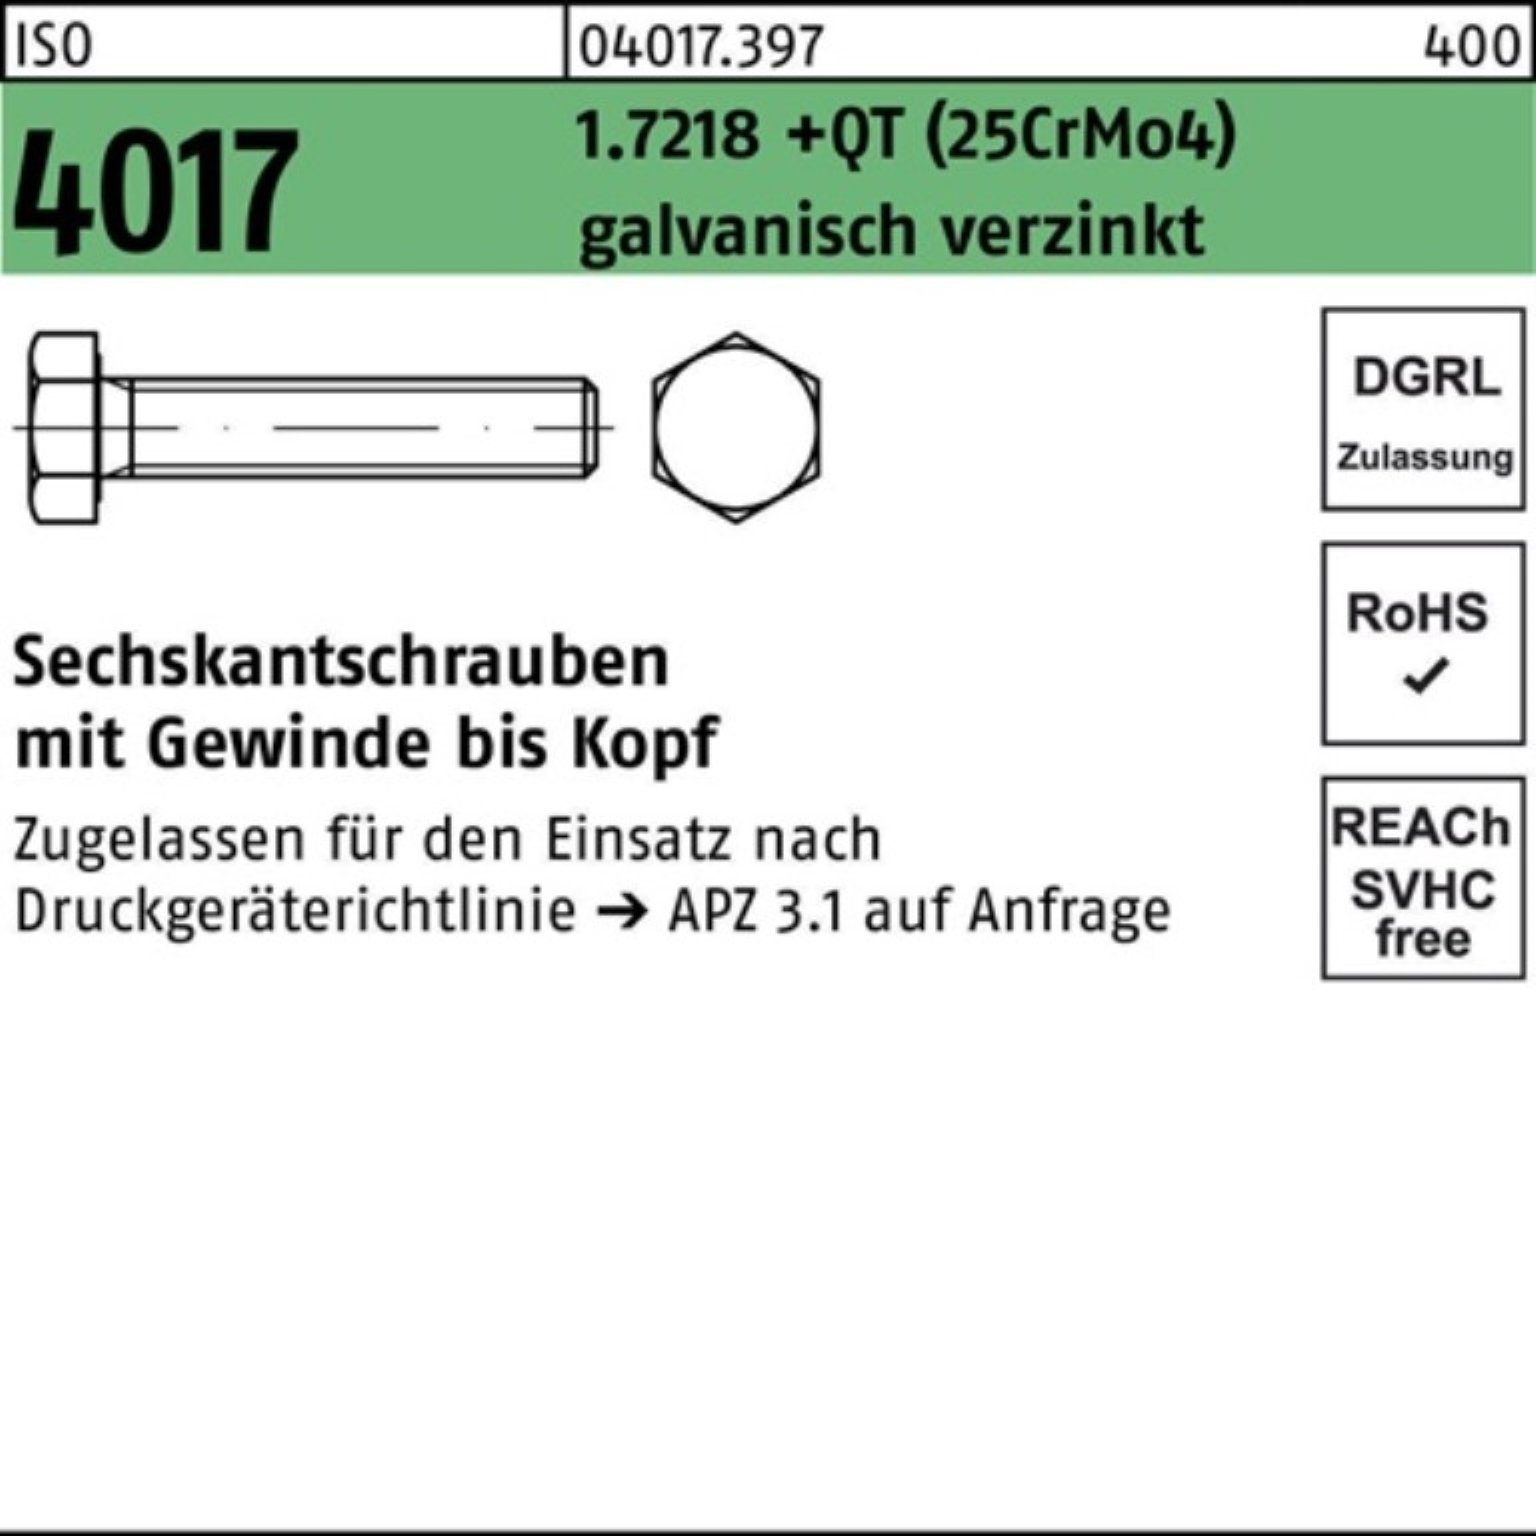 g ISO Sechskantschraube M12x35 Sechskantschraube Pack (25CrMo4) VG Bufab 1.7218 100er +QT 4017